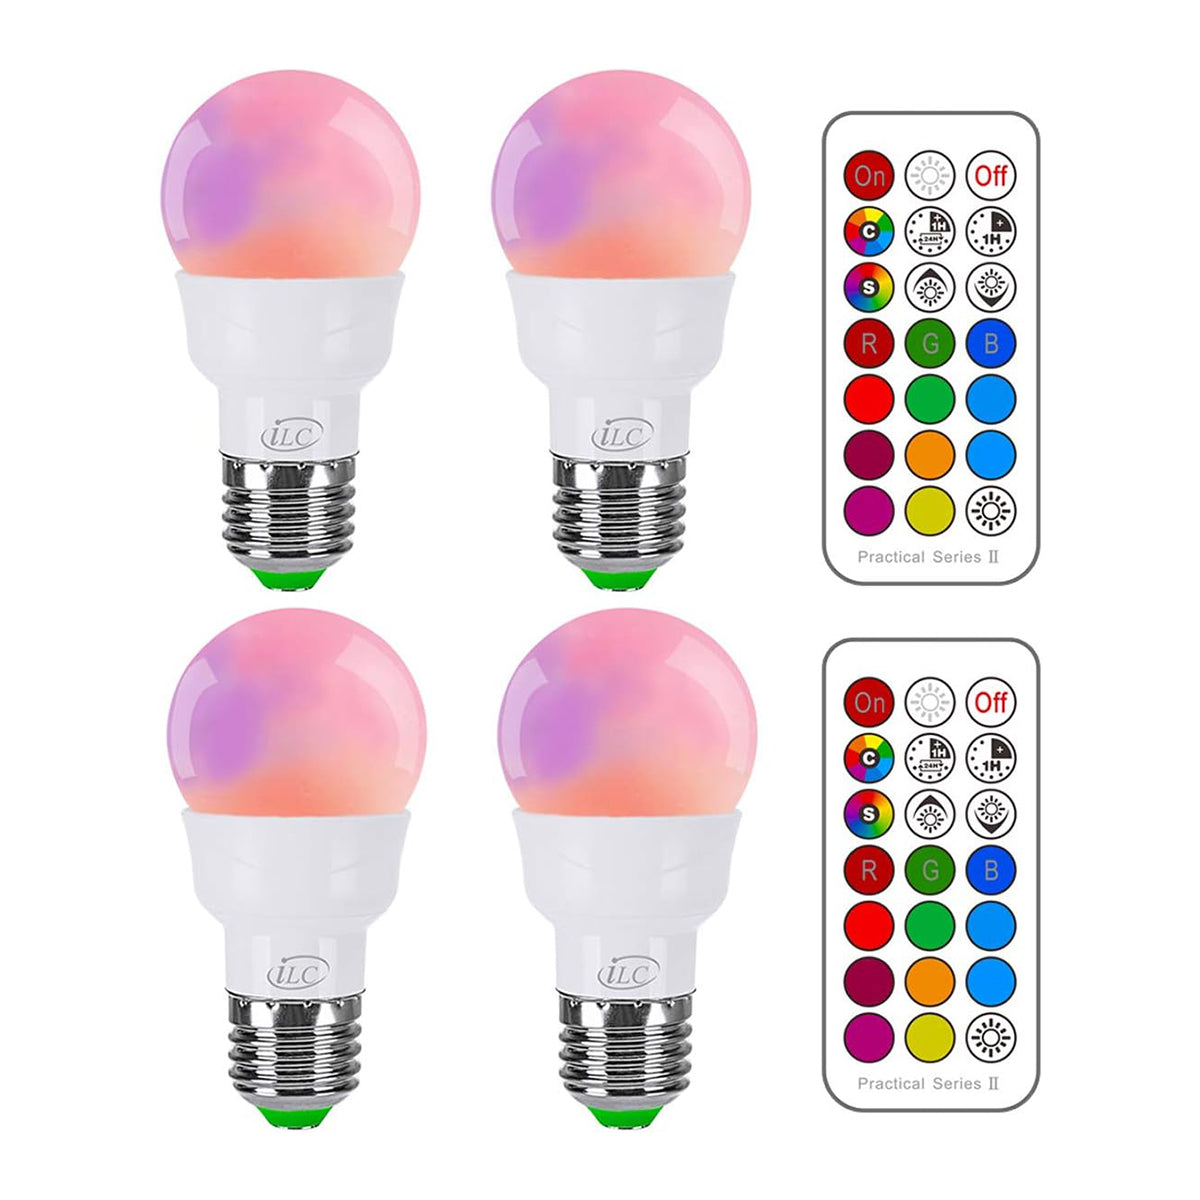 iLC RGB-LED-Glühbirne, Farbwechsel, entspricht 40 W, 450 lm, dimmbar, 5 W, E26-Schraubsockel, RGBW, Stimmungslicht-Flutlicht-Glühbirne – 12 Farbauswahl – Timing-Infrarot-Fernbedienung im Lieferumfang enthalten (4 Stück) 